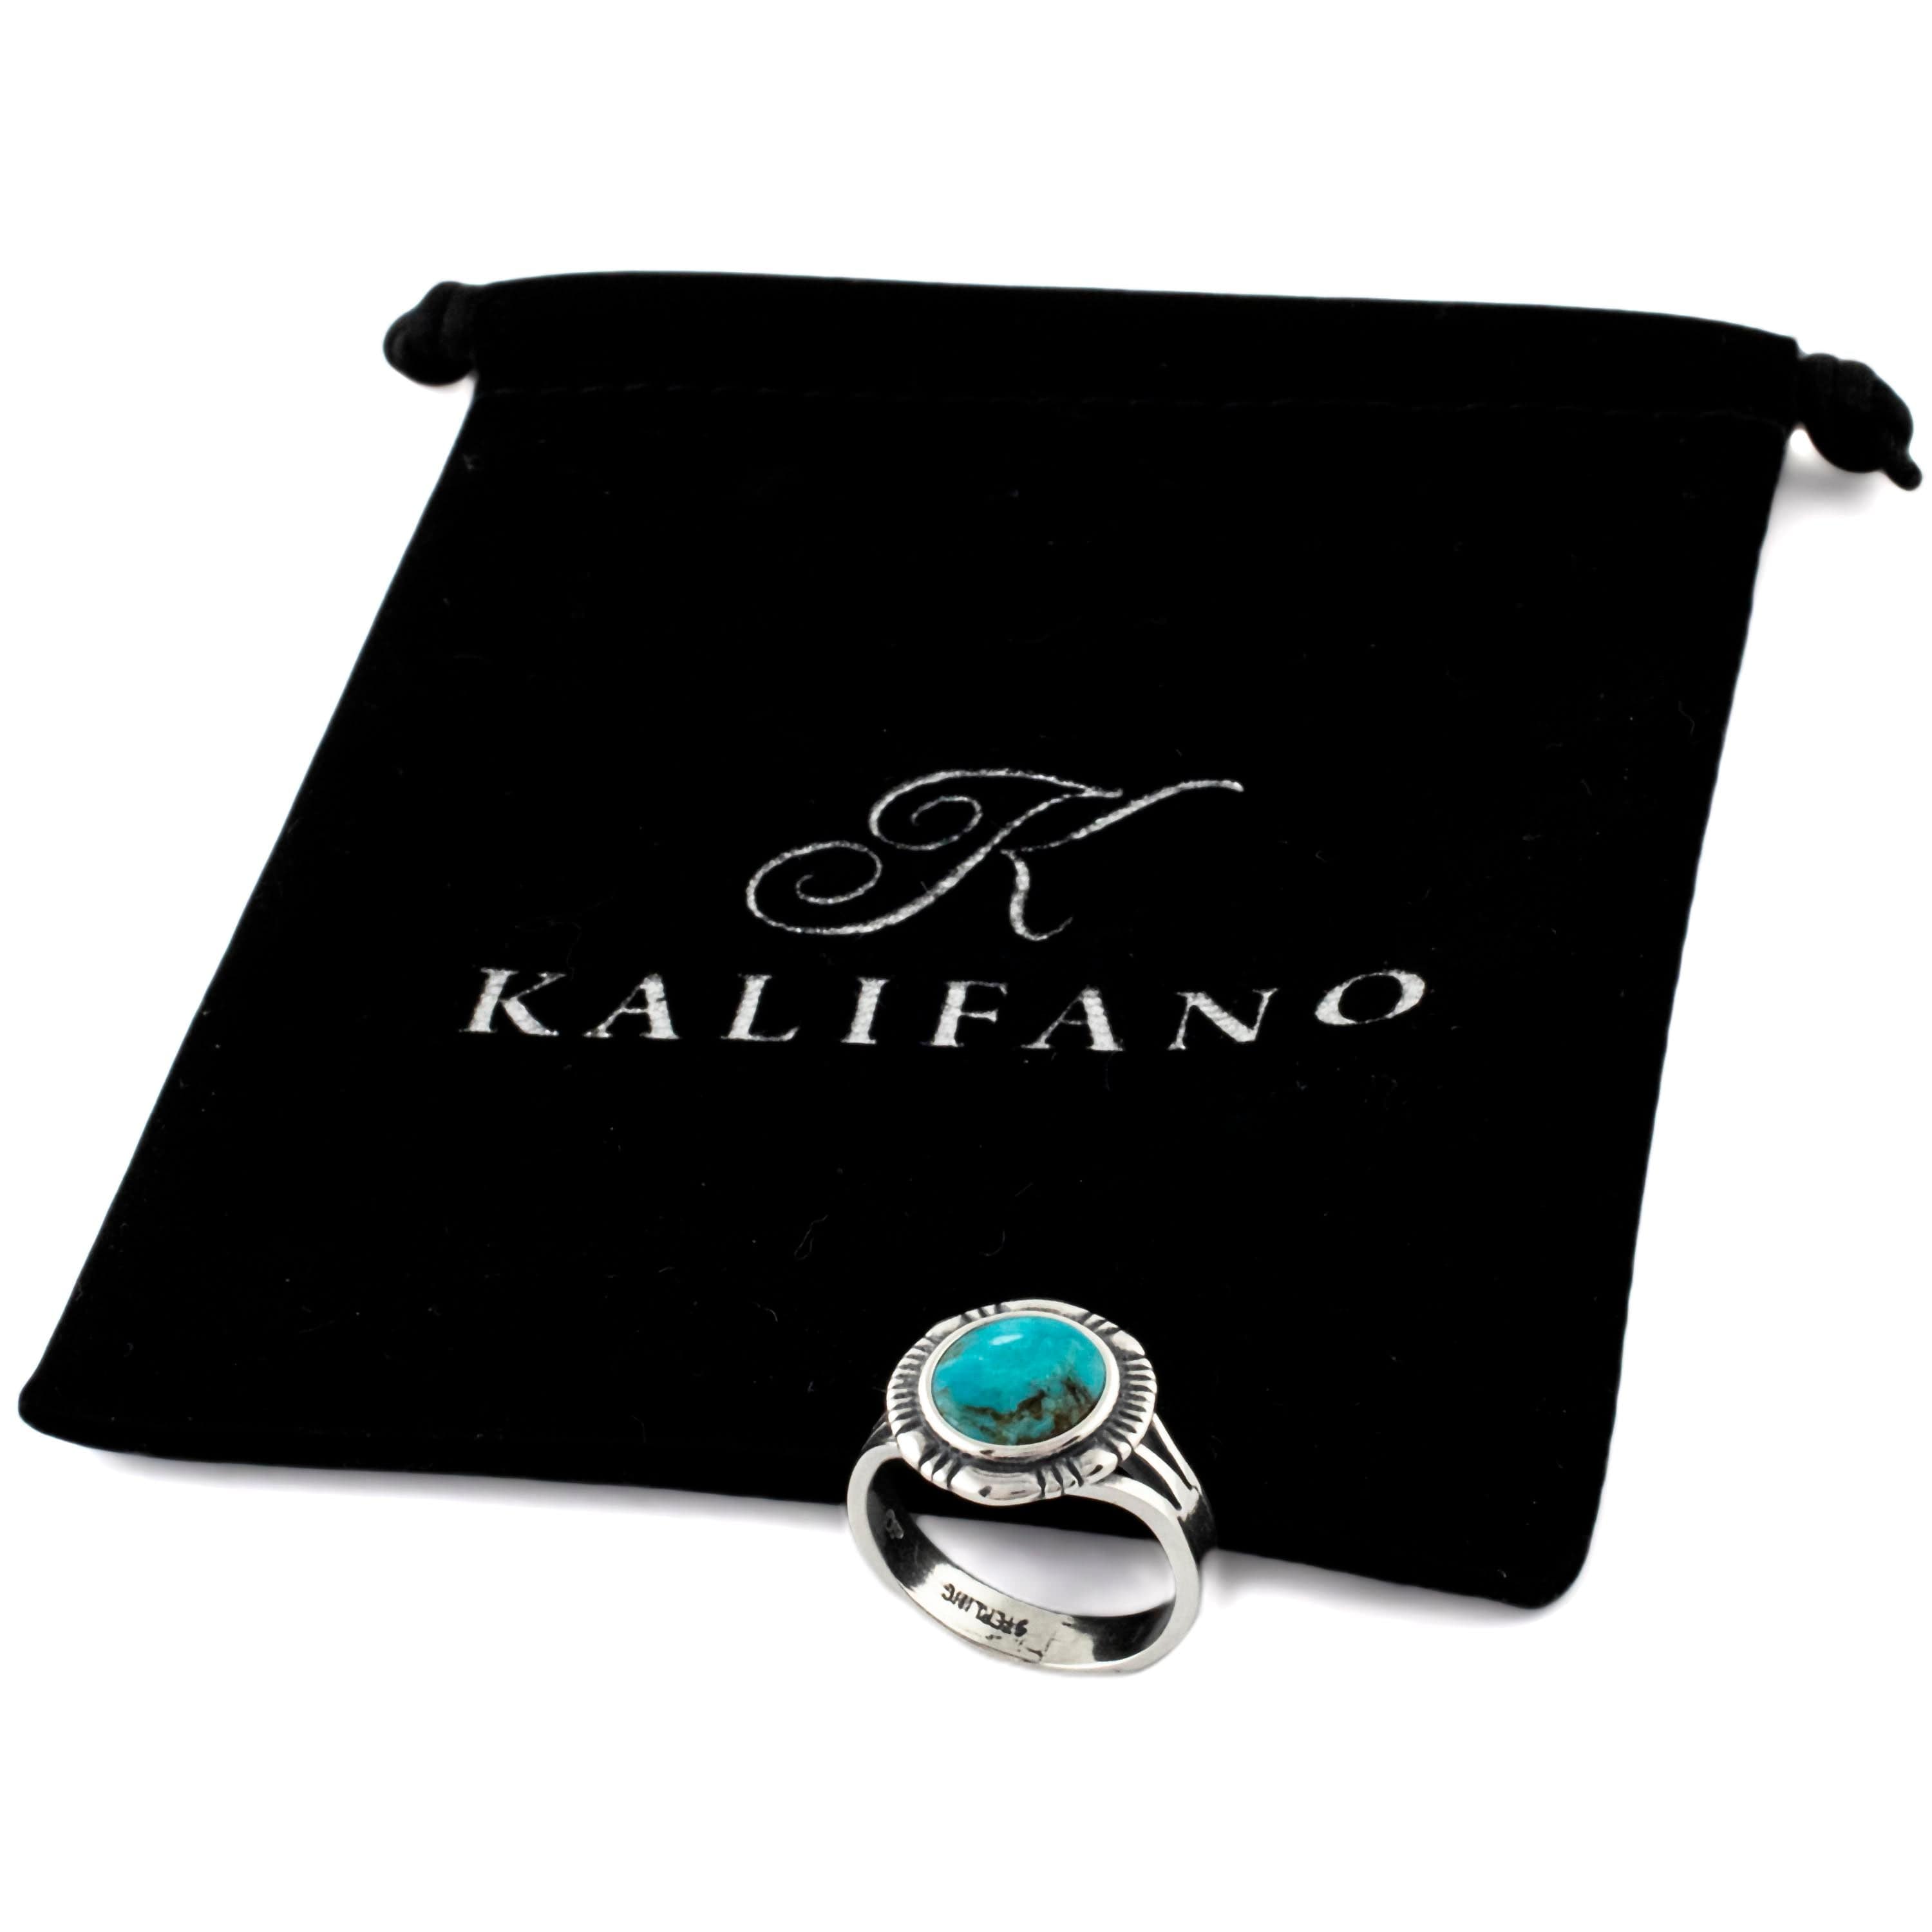 Kalifano Native American Jewelry Circular King Manassa Turquoise USA Handmade 925 Sterling Silver Ring